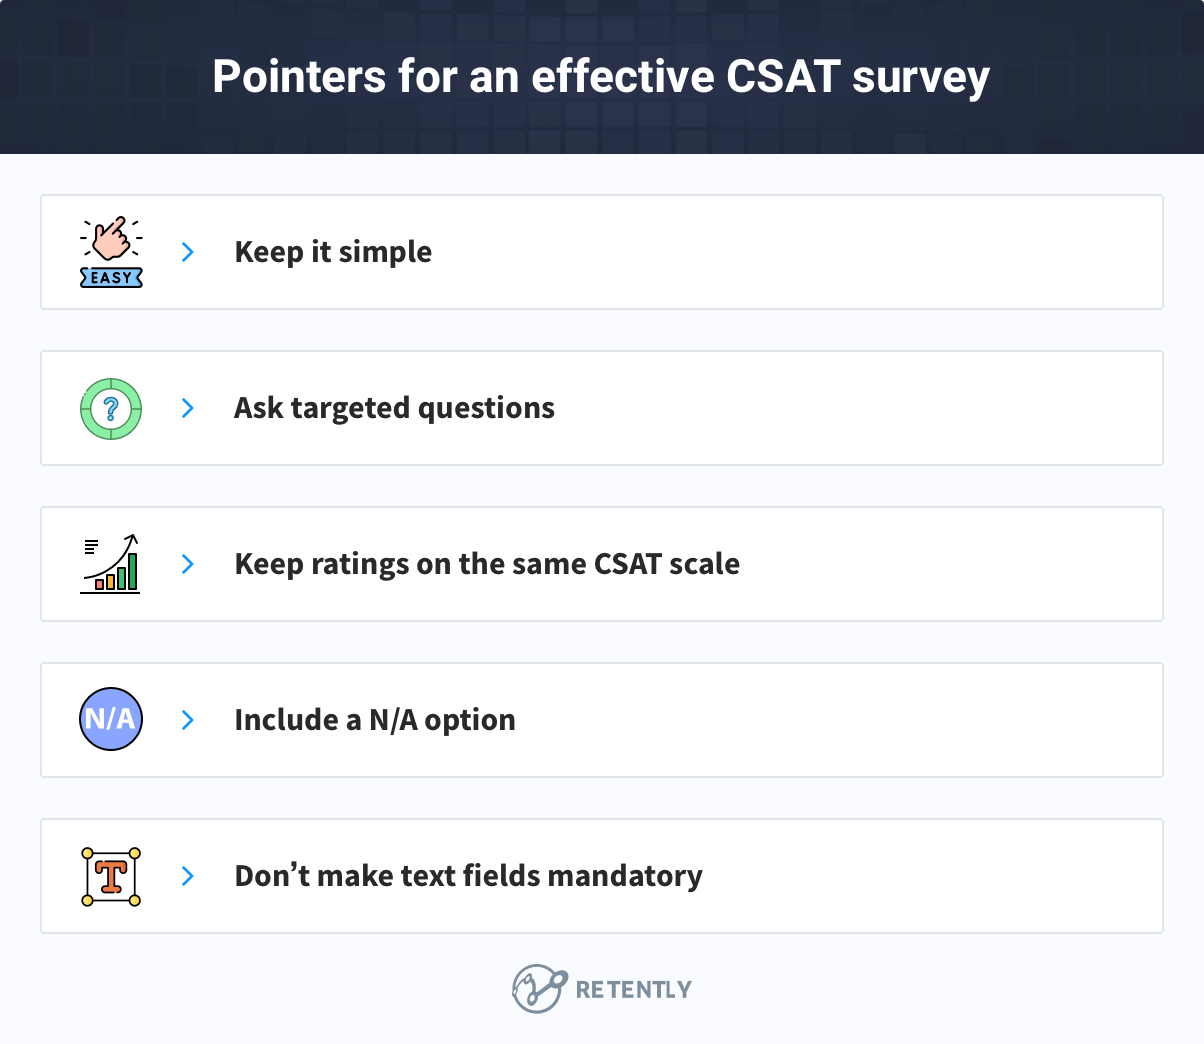 Pointers for an effective CSAT survey